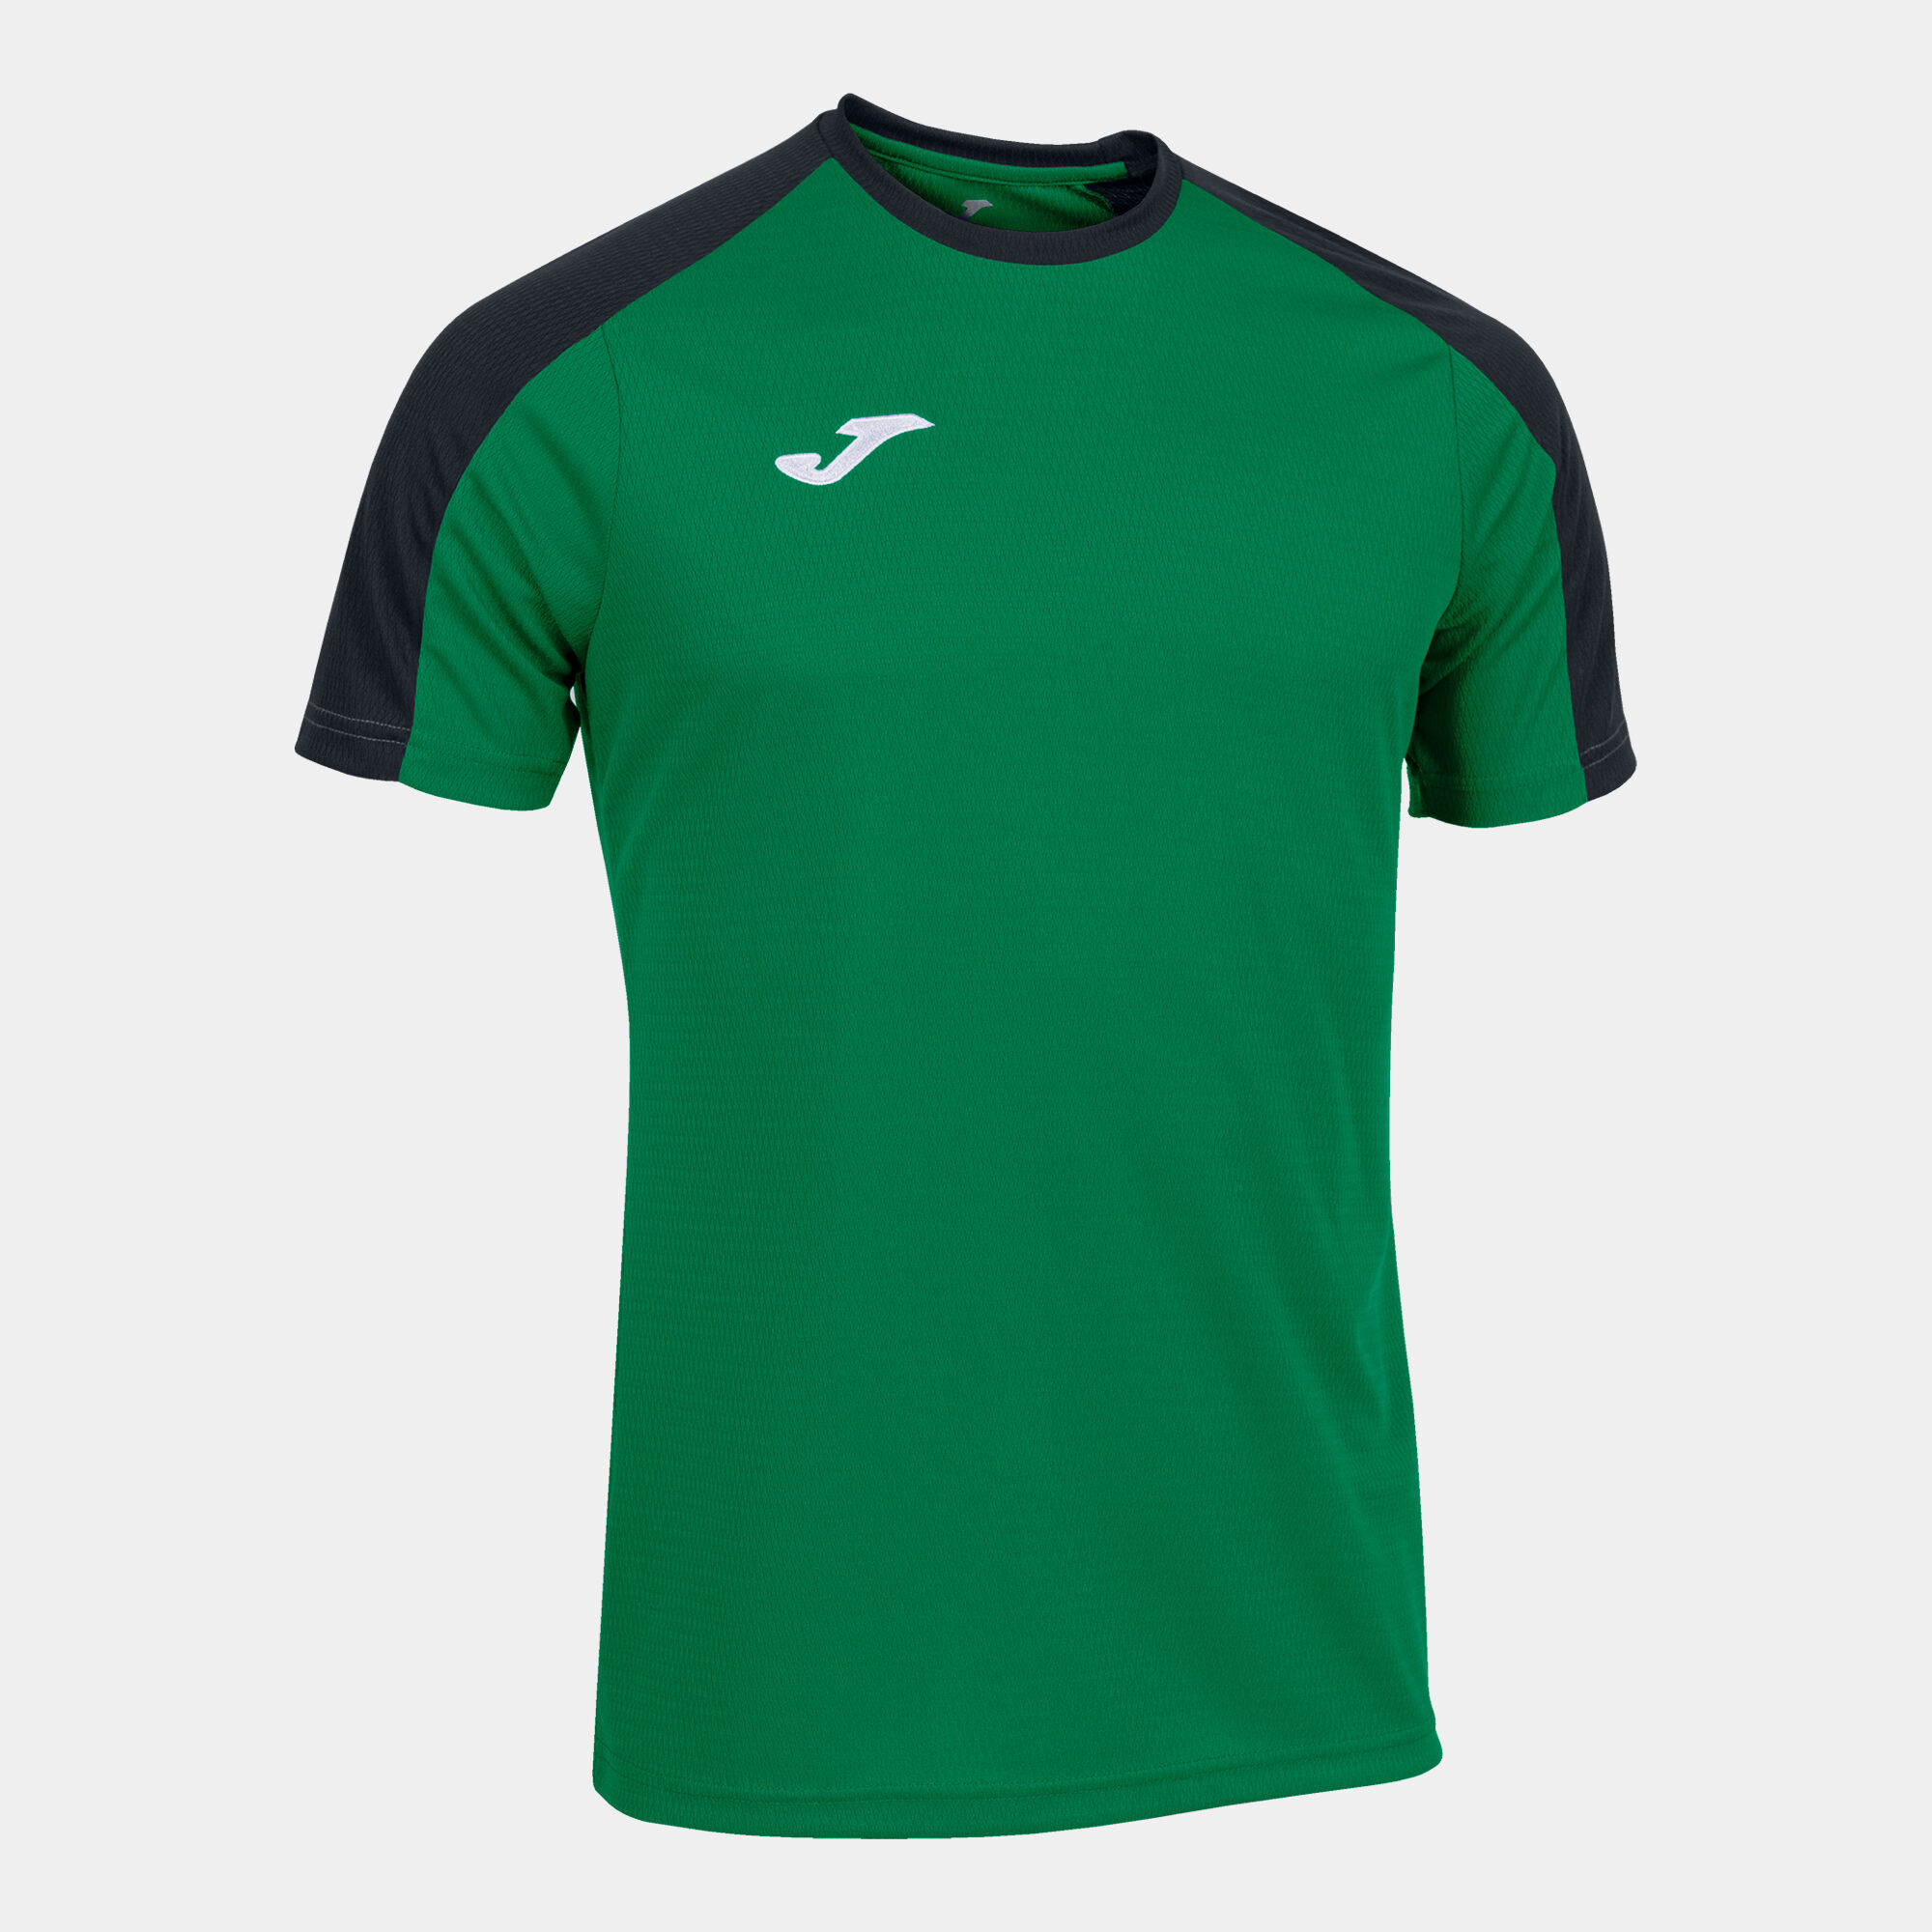 Shirt short sleeve man Eco Championship green black